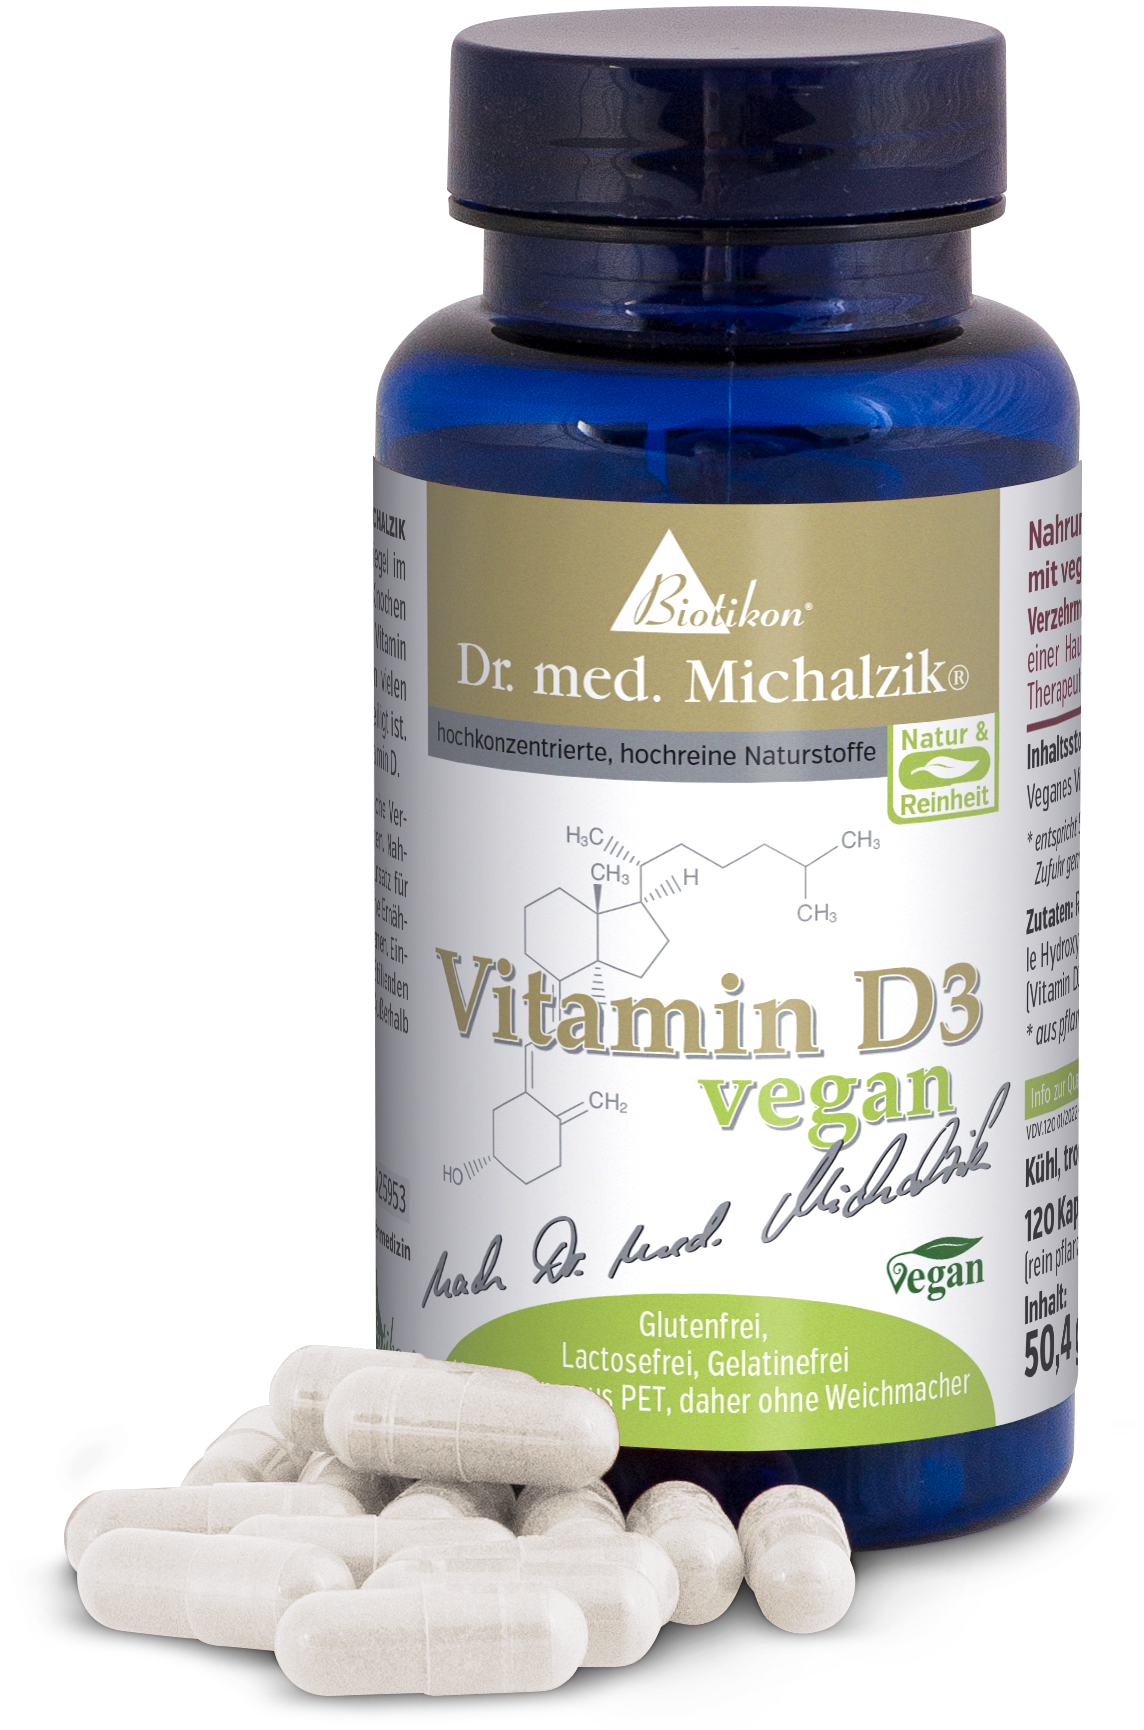 Vitamina D3 vegan